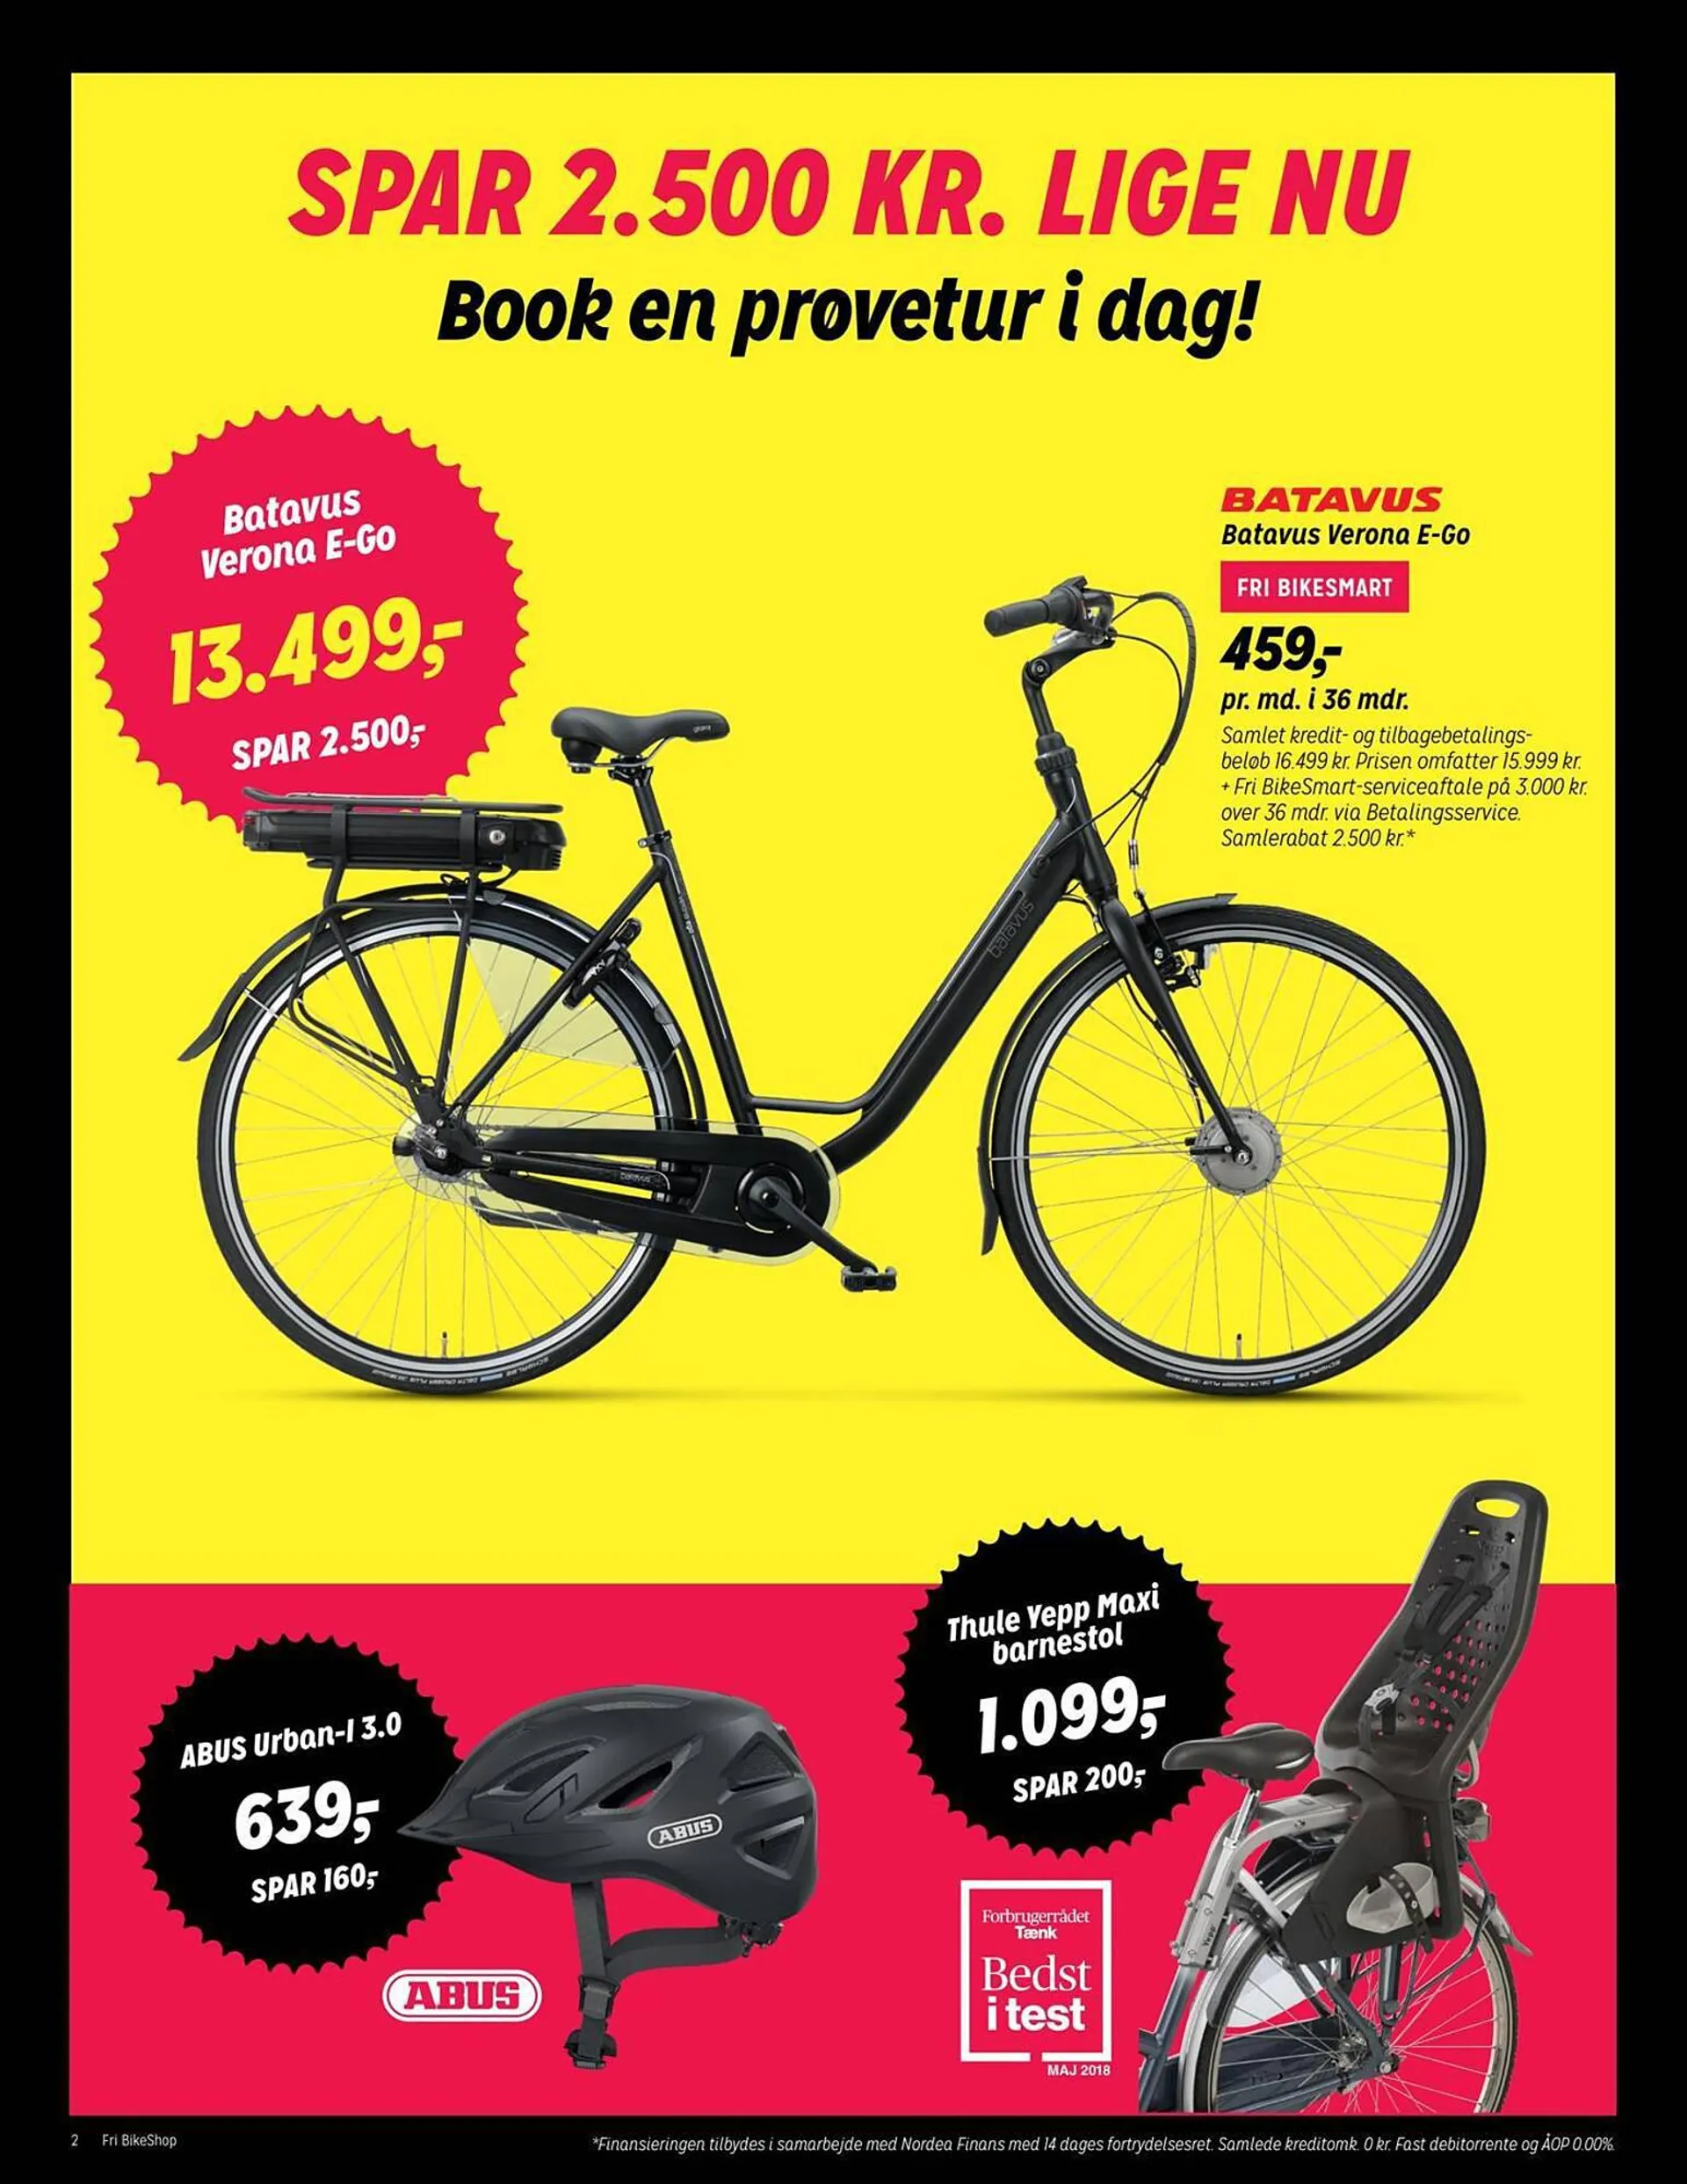 Fri BikeShopOFFLINE tilbudsavis - 2